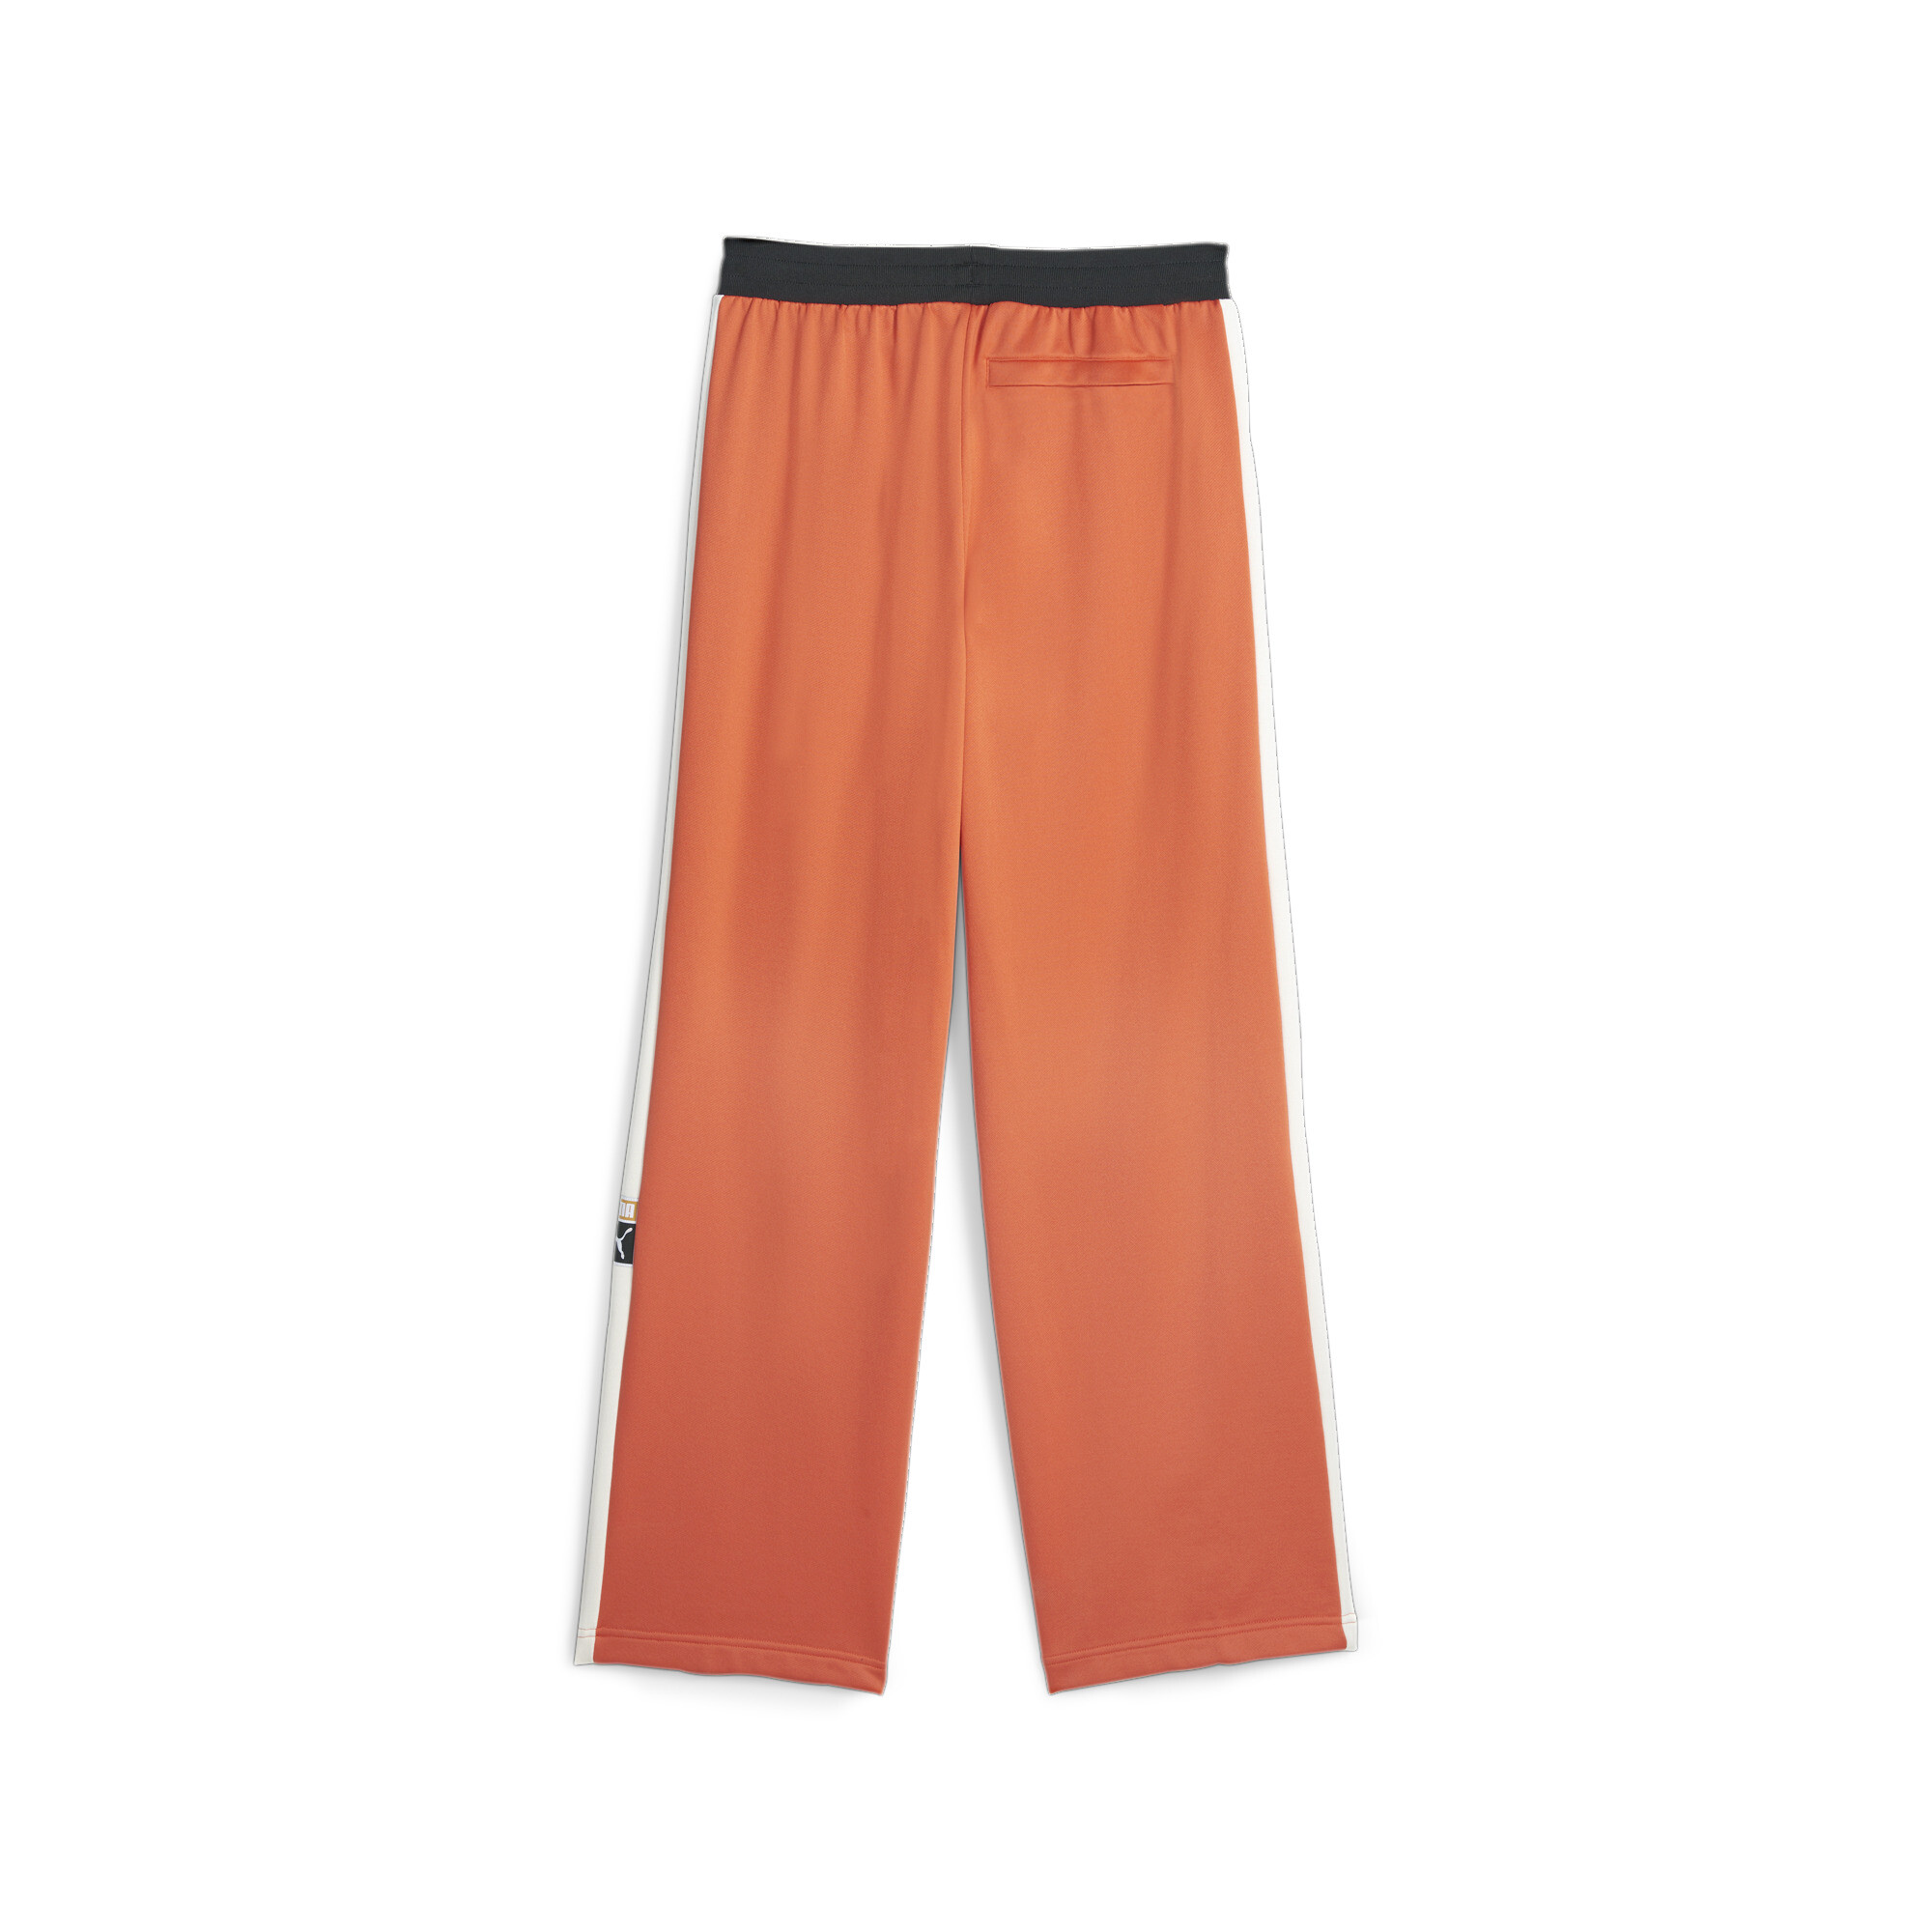 Men's PUMA T7 Track Pants In Orange, Size Large